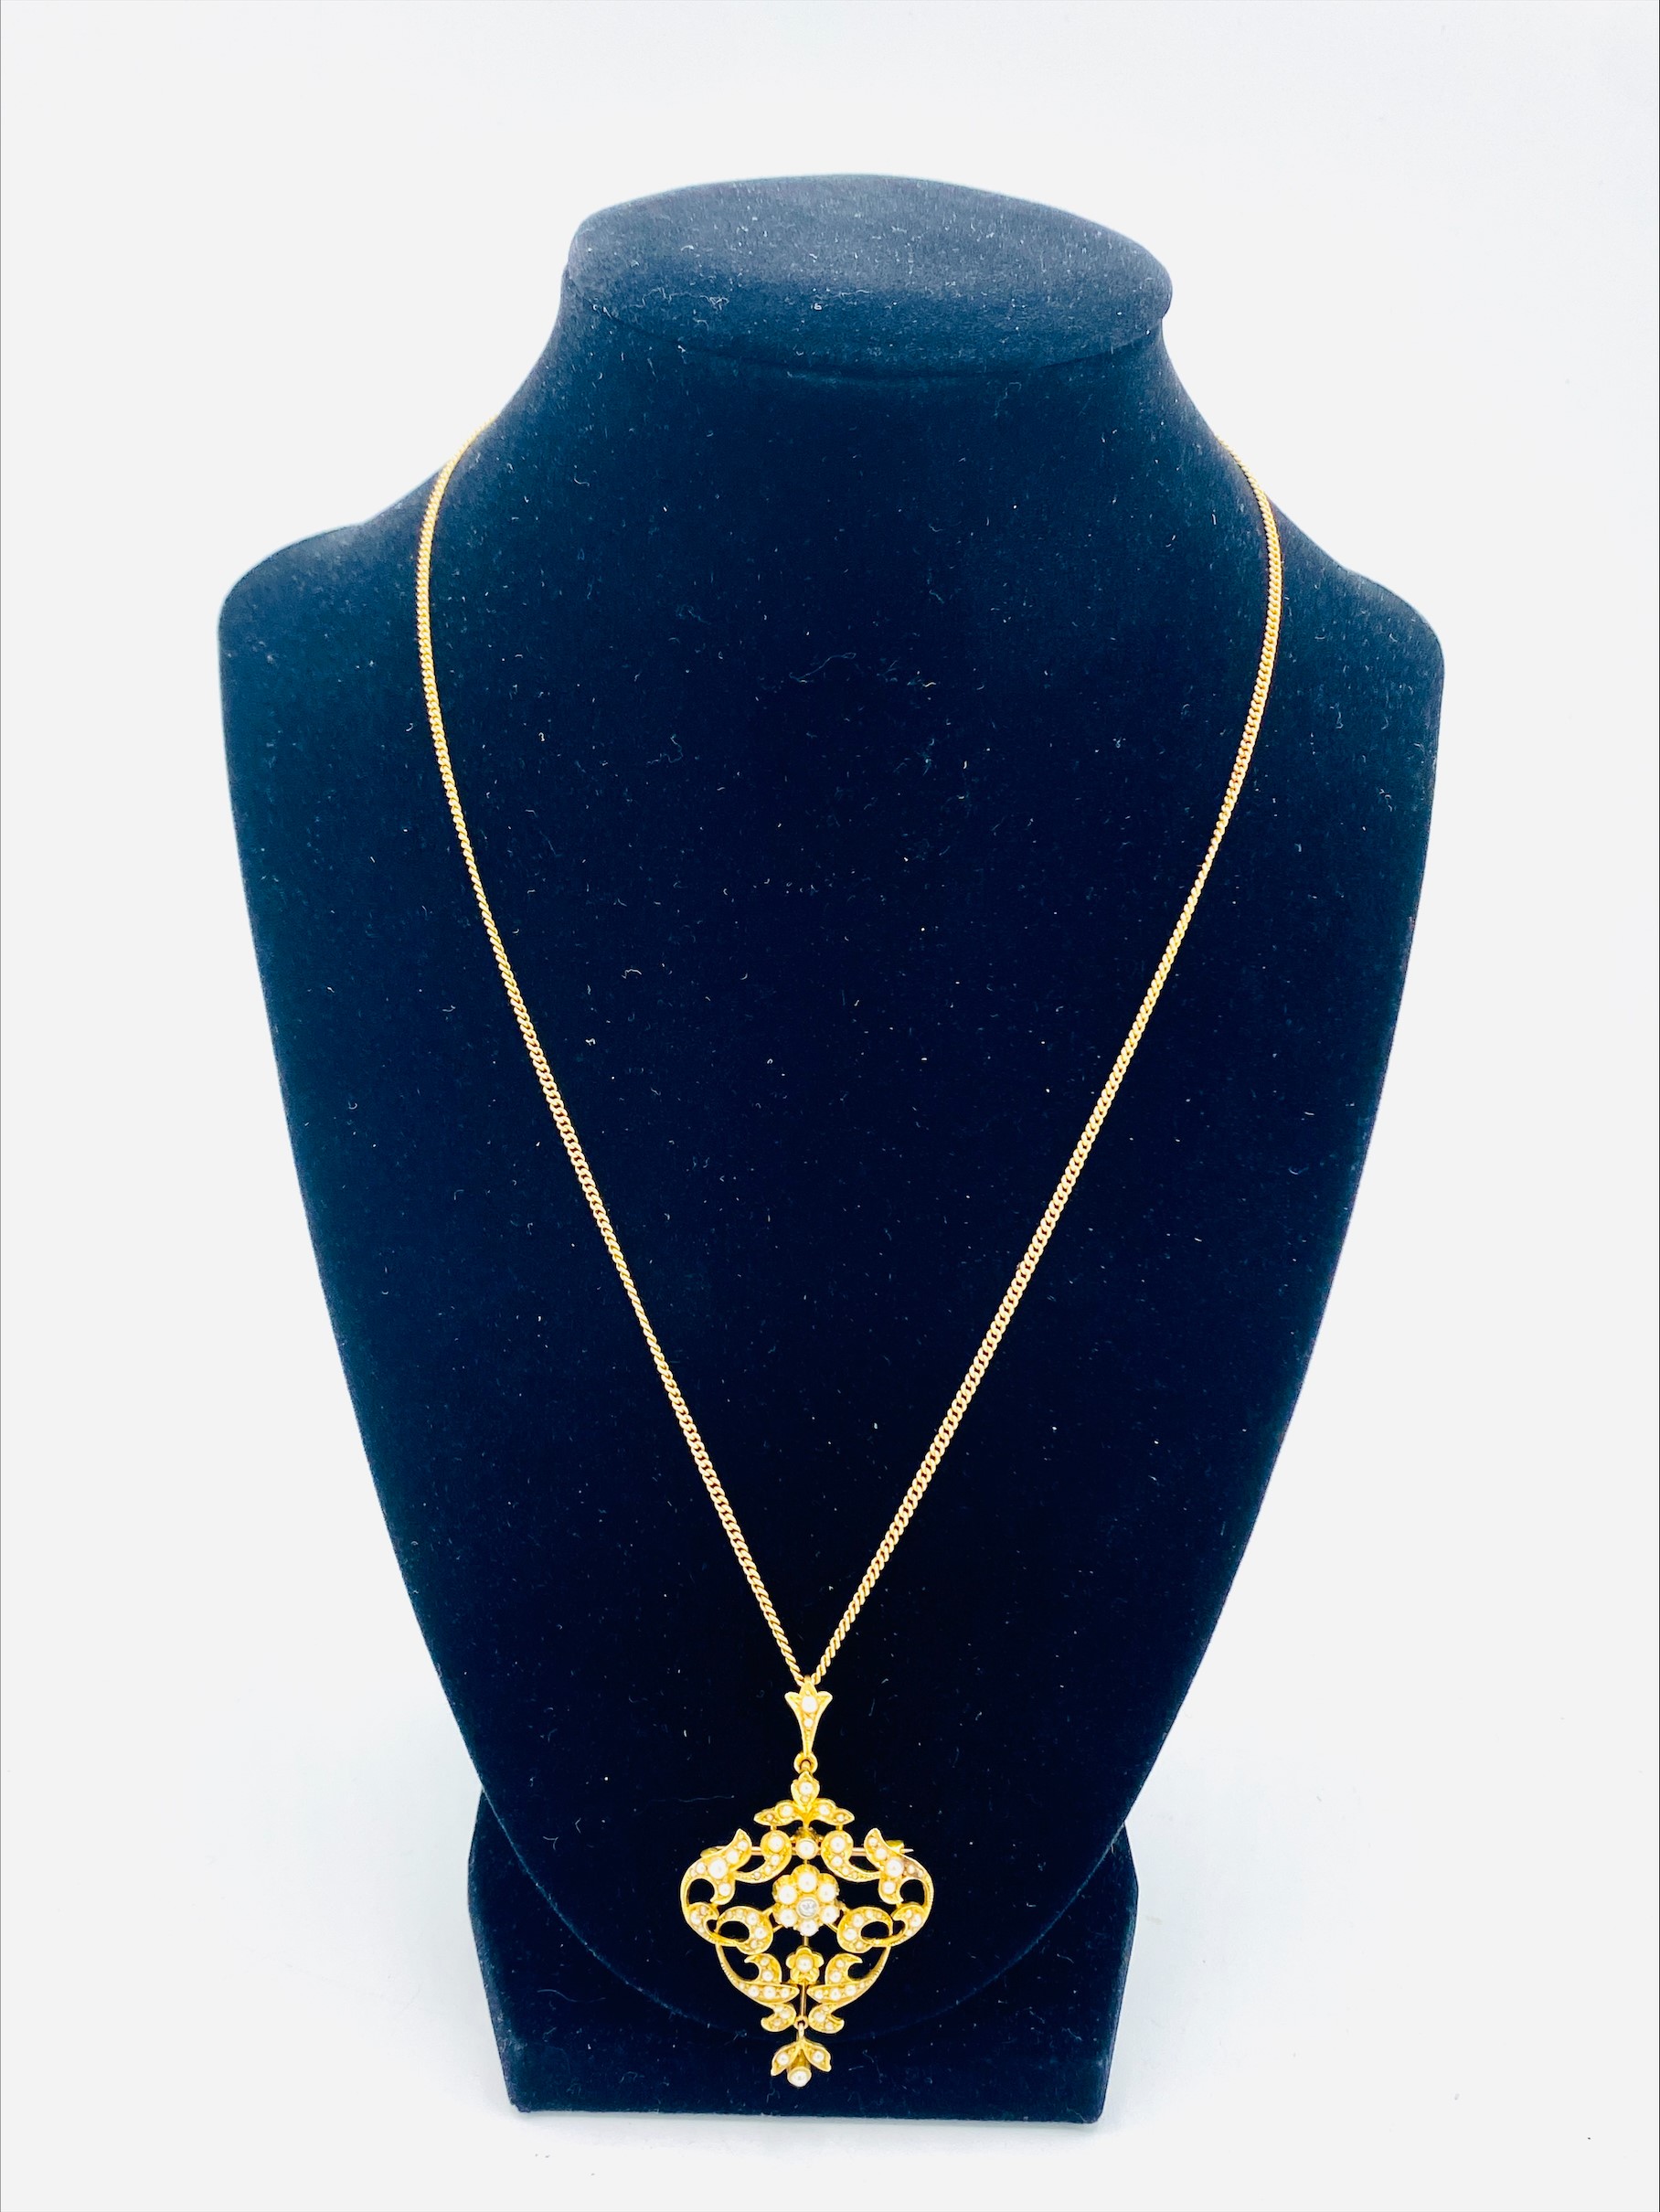 Edwardian 15ct gold lavalier necklace - Image 2 of 4